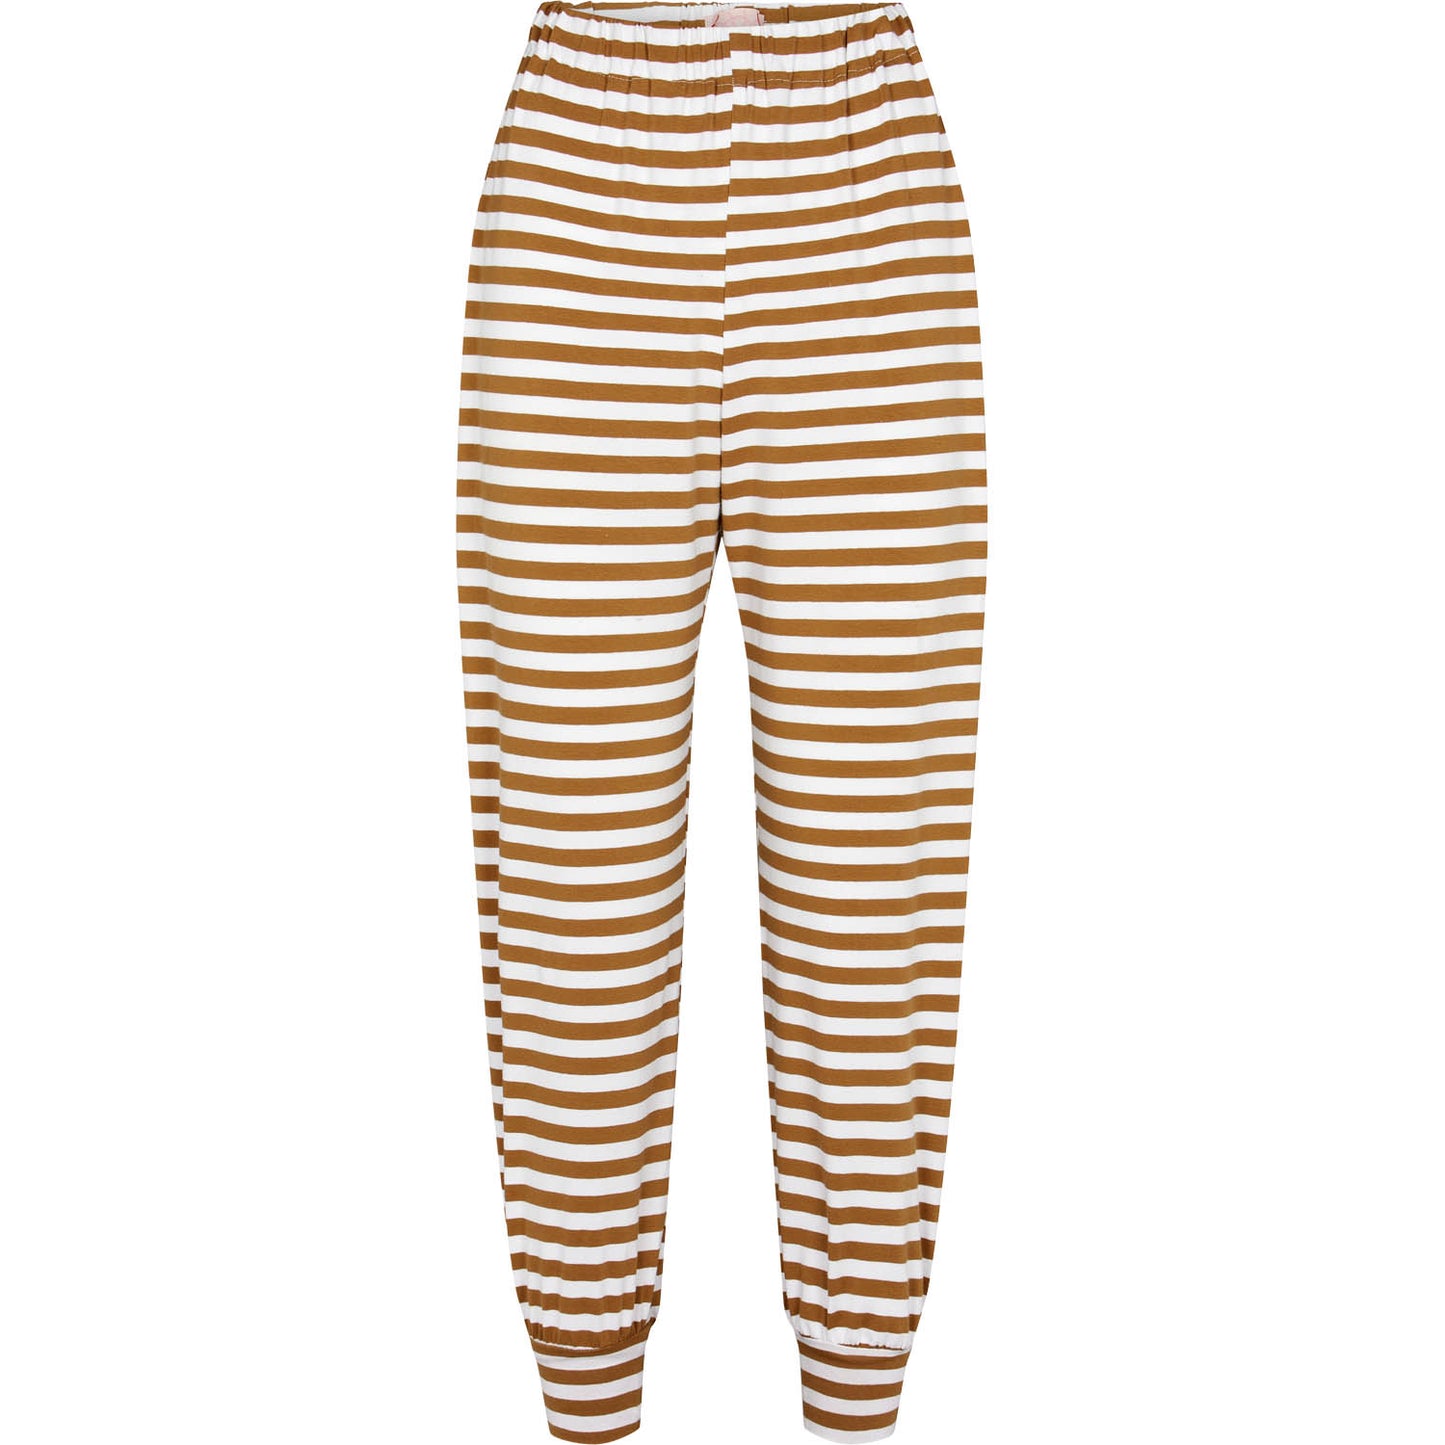 Tommy Slumber Pants S - Caramel stripes